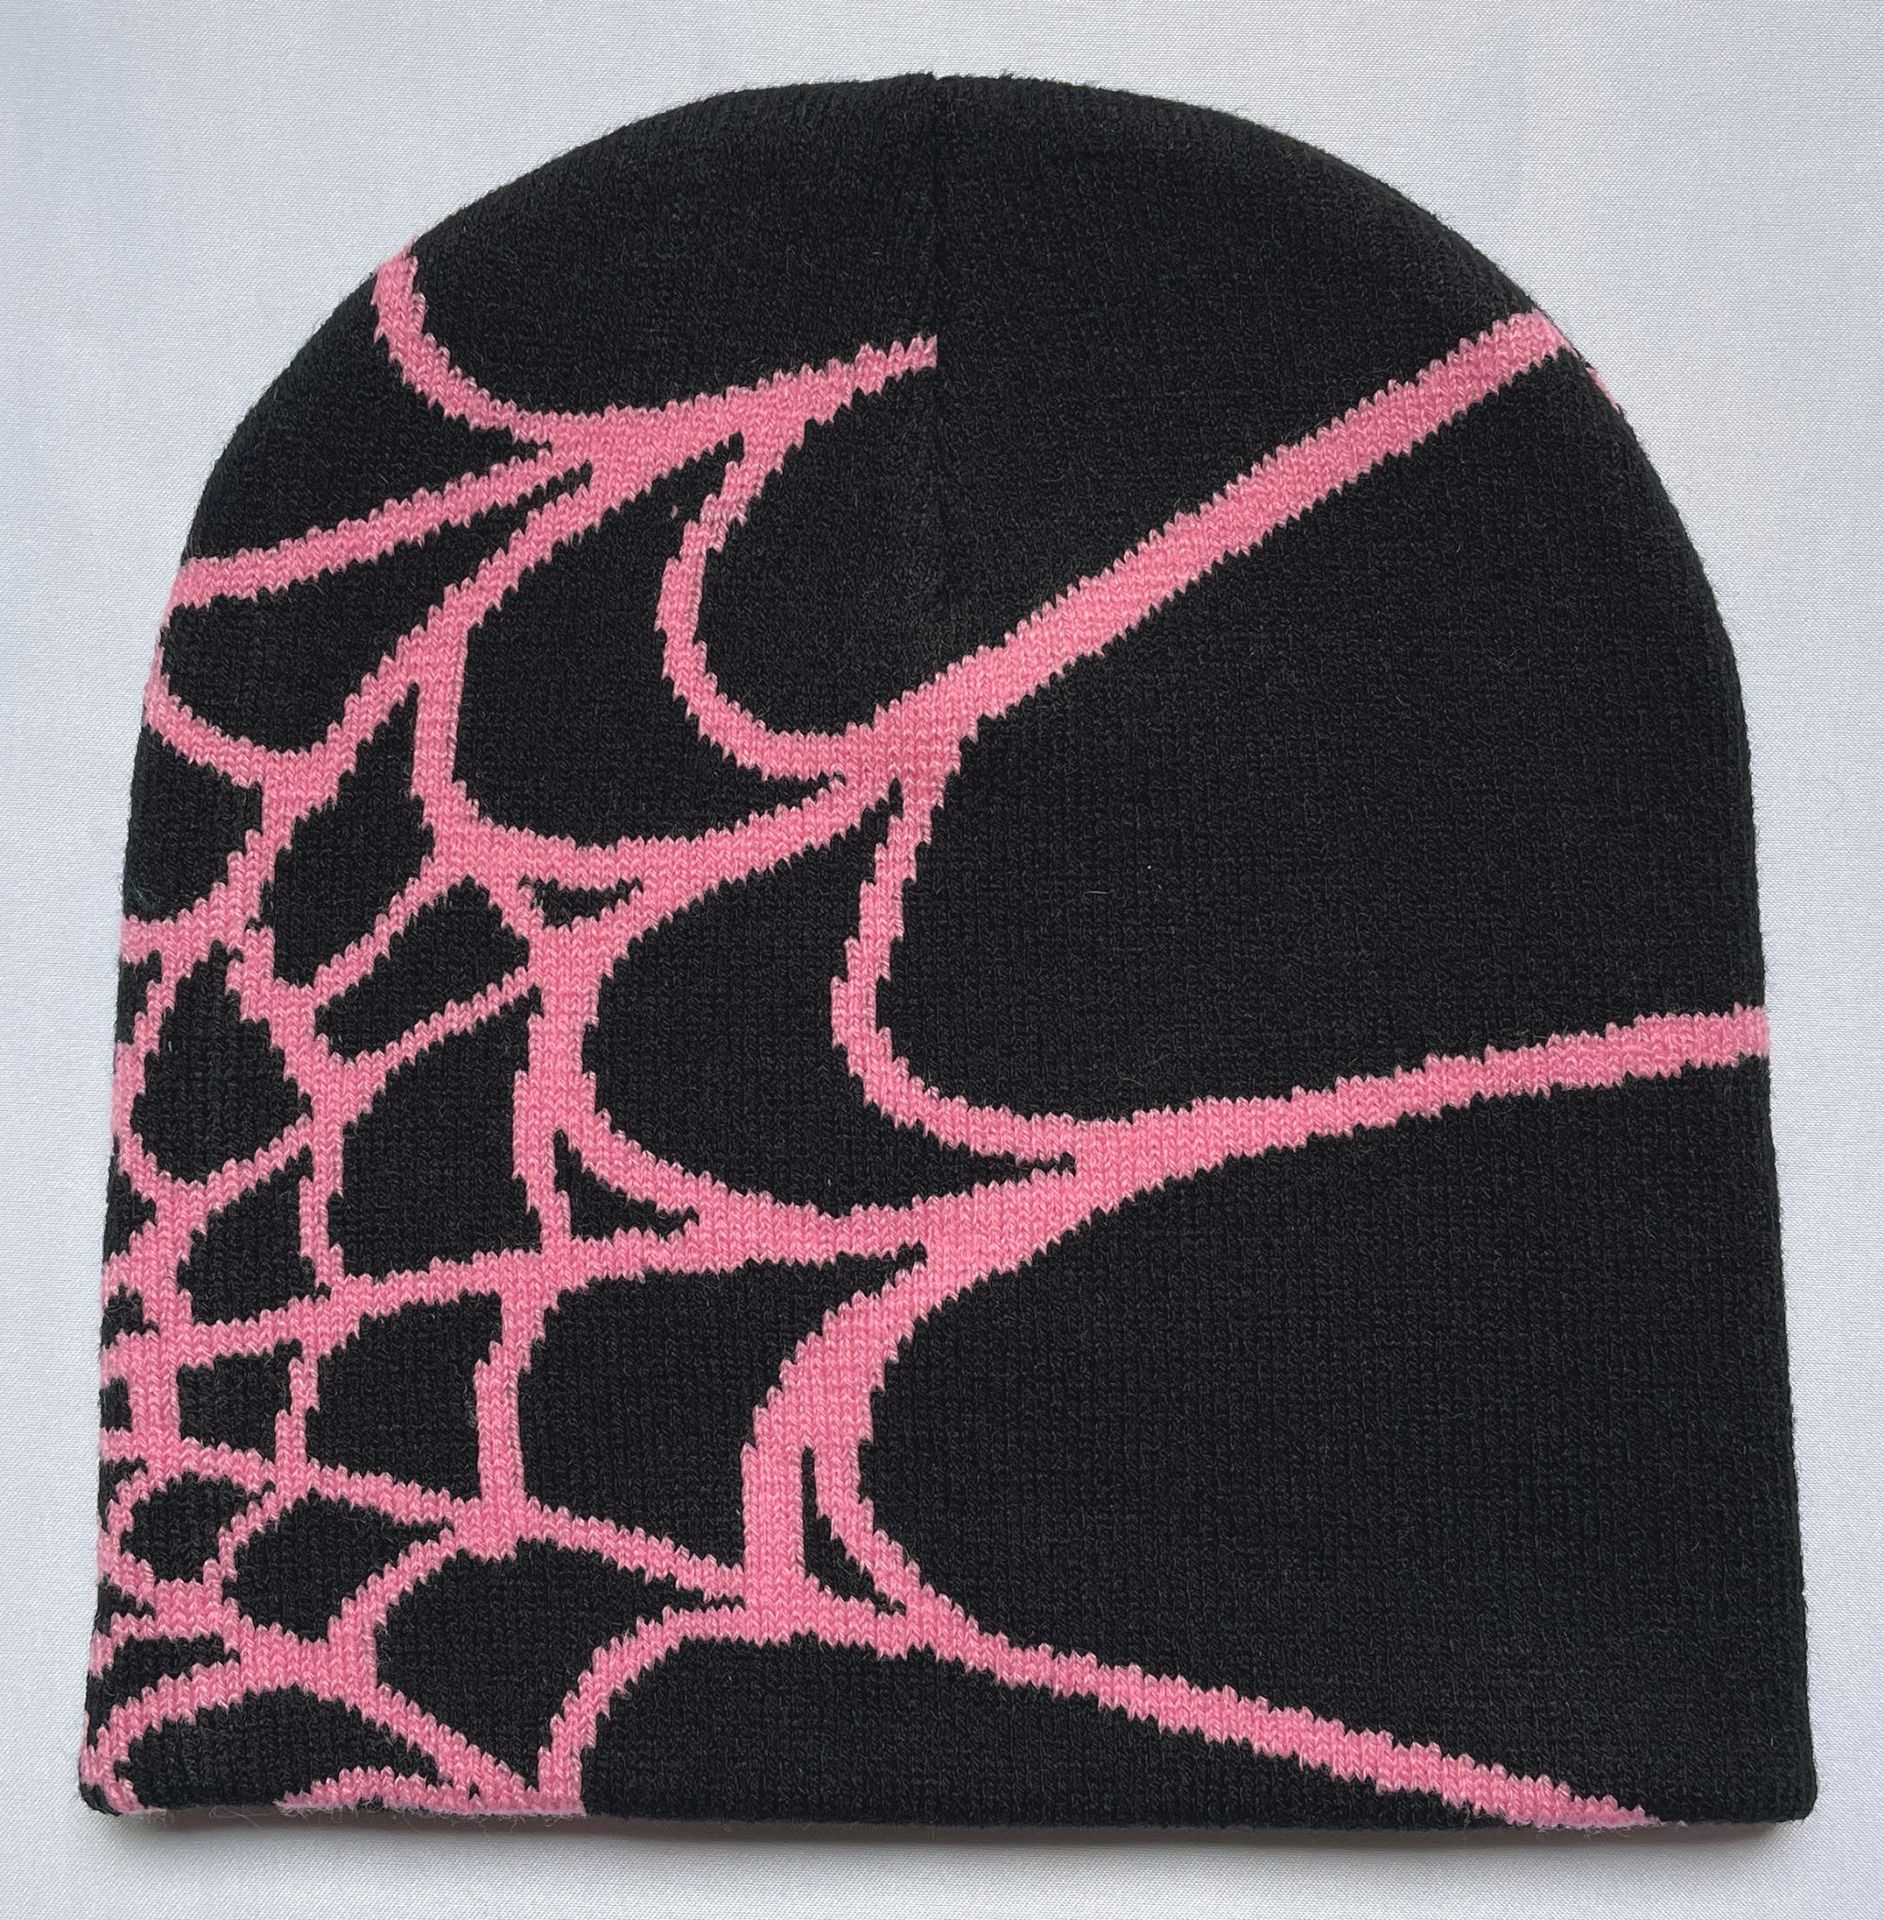 Knitting Beanies Hat Men Women Autumn Winter Warm Fashion Spider Web Cap for Hats